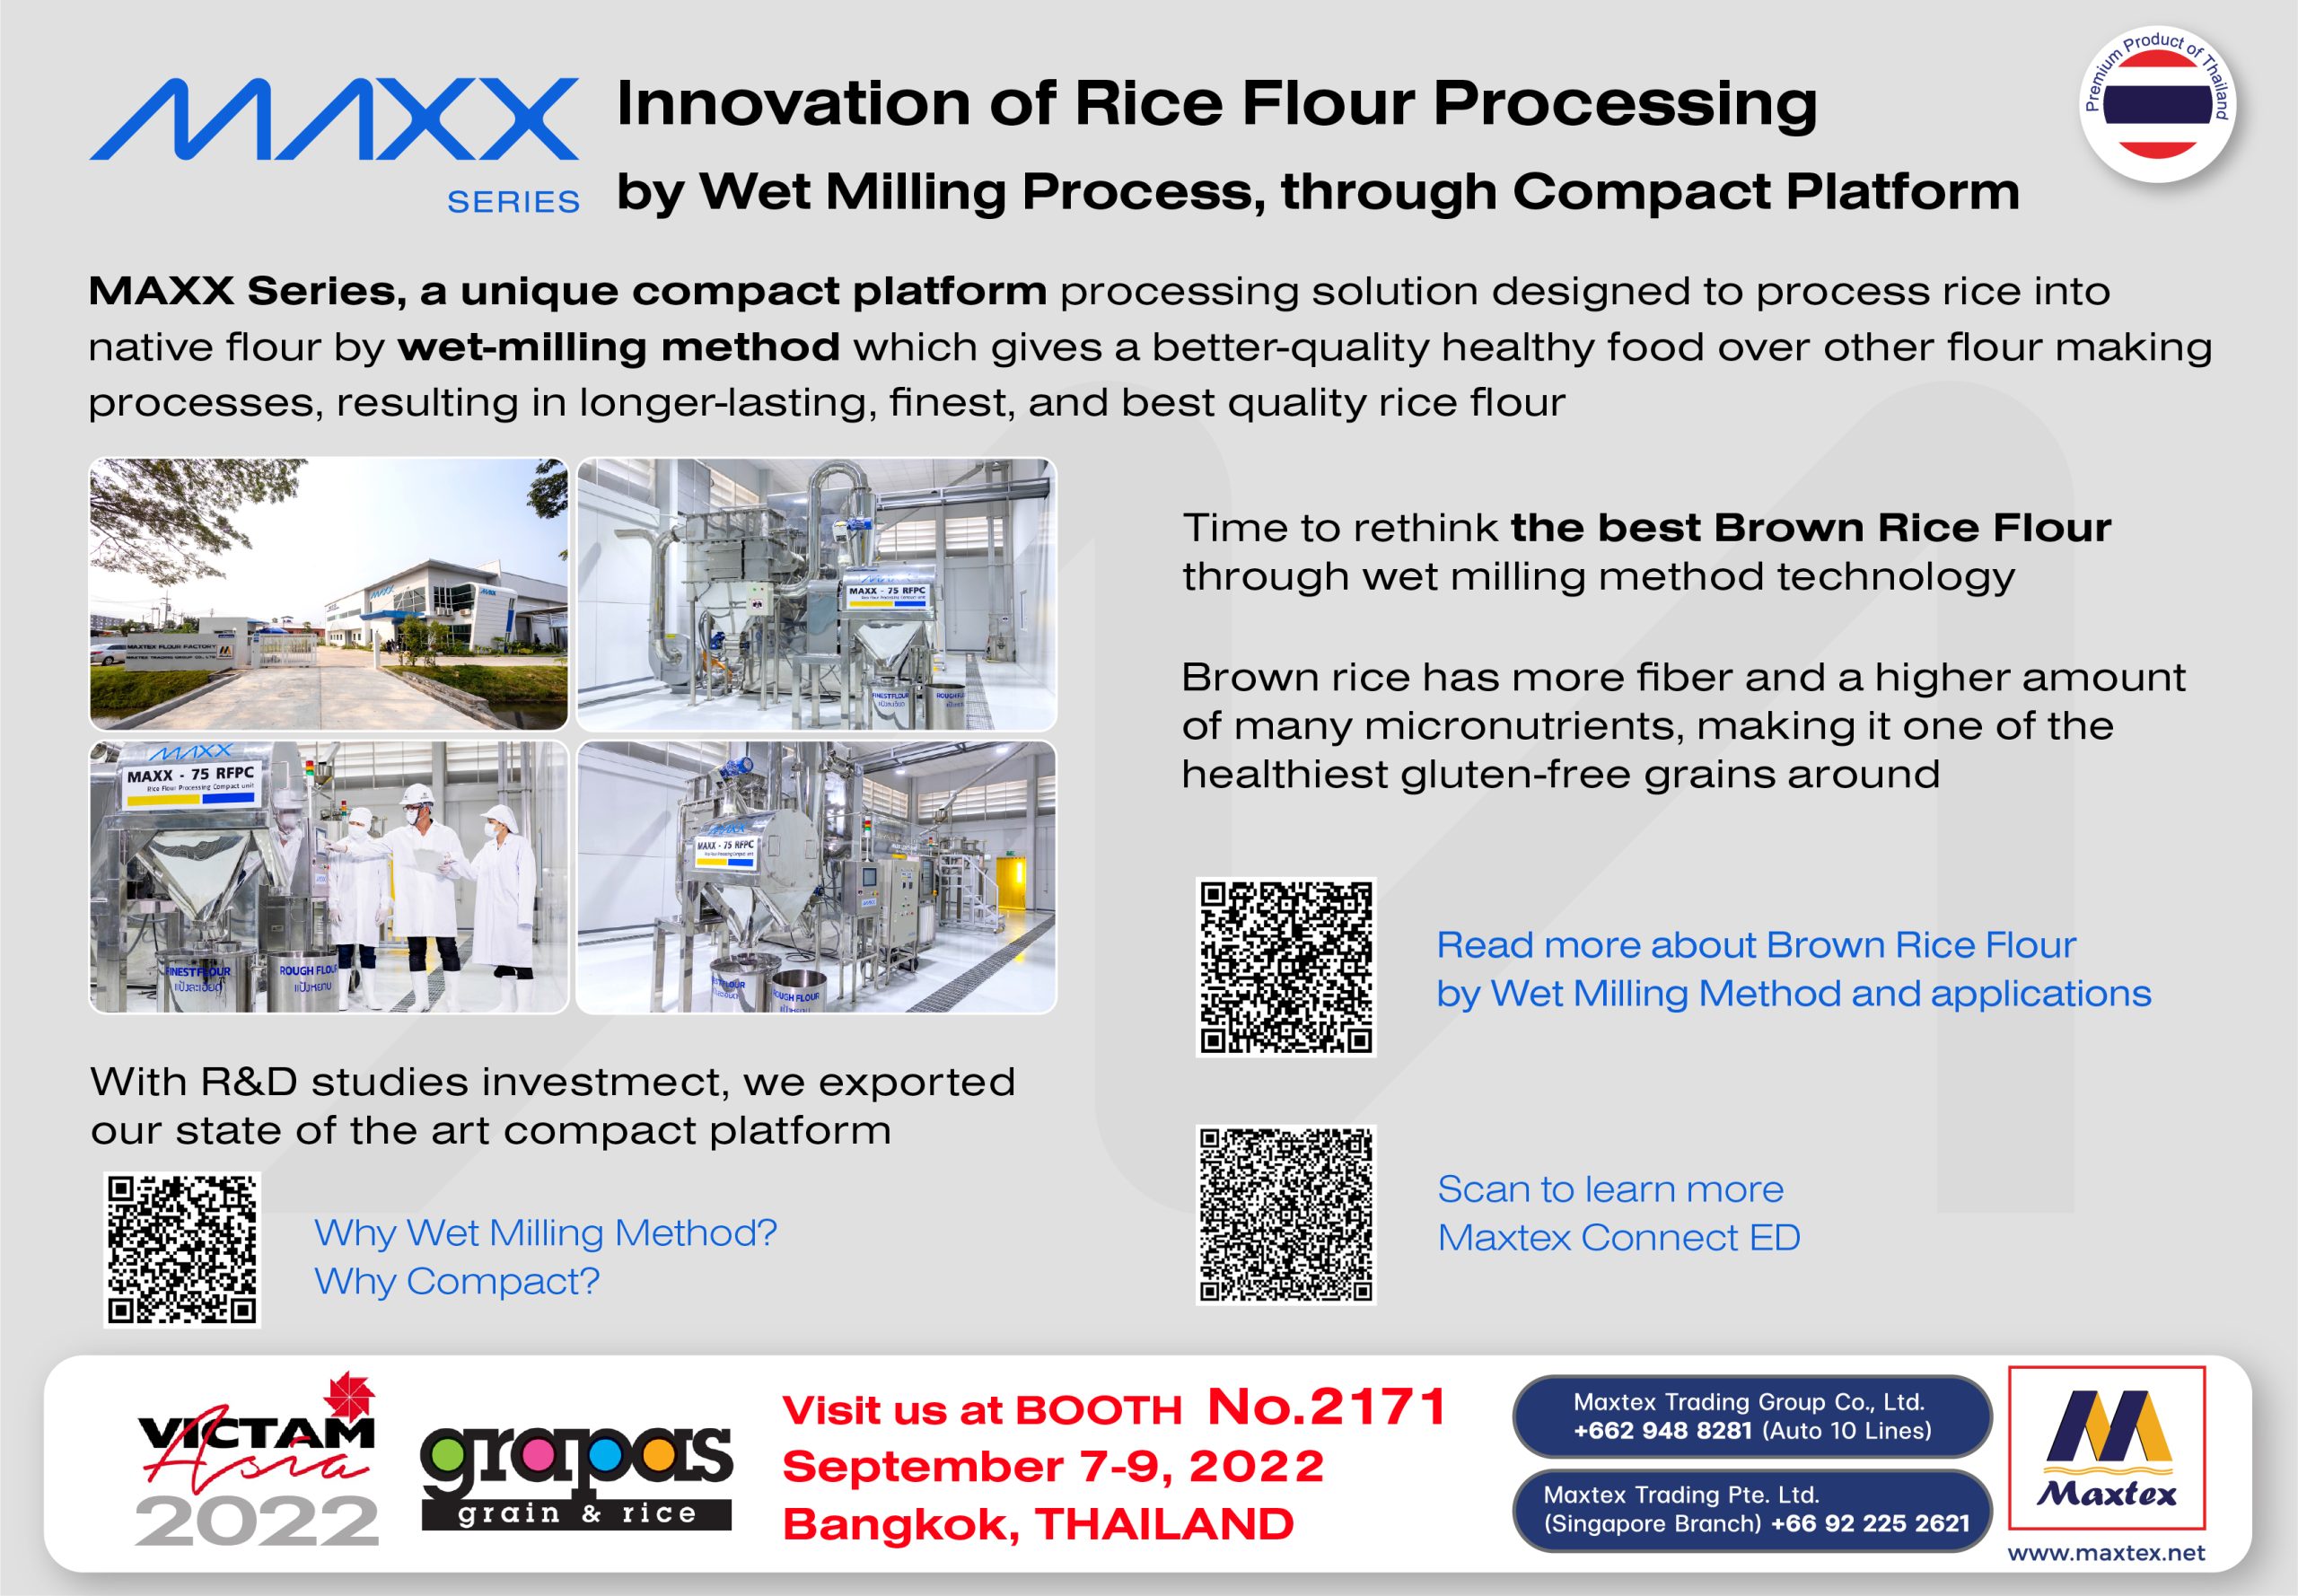 rice flour process milling platform by wet milling process